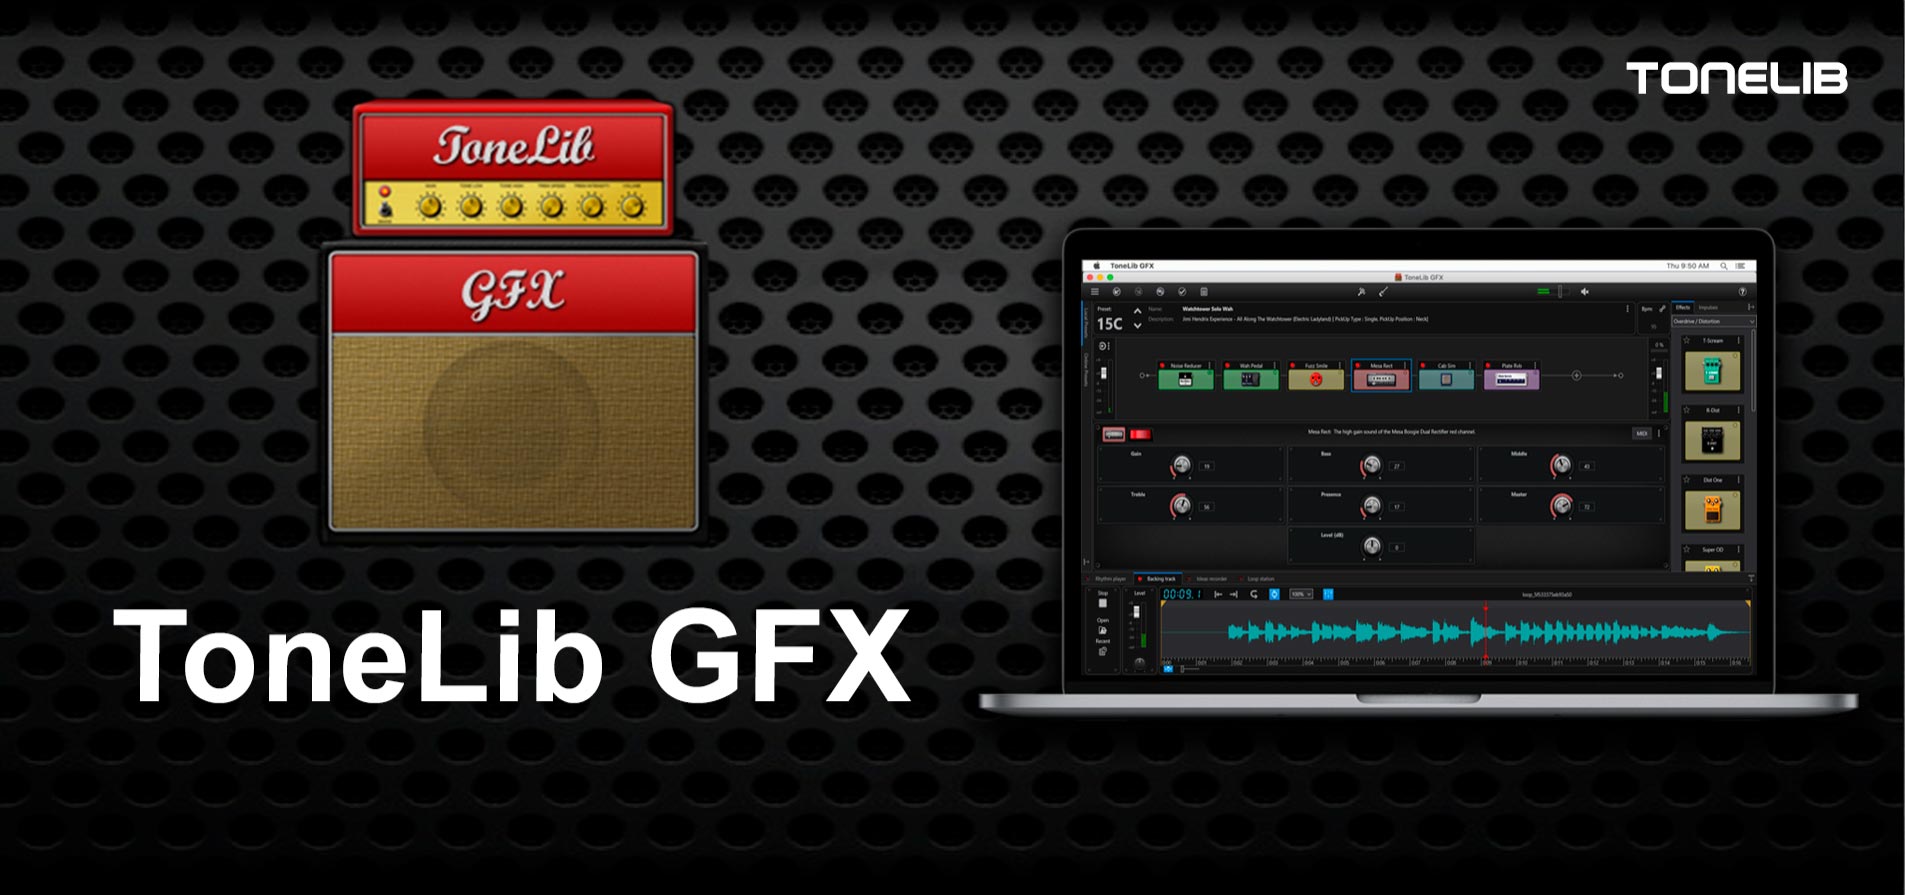 ToneLib GFX - Thumbnail with Logo and Standalone version of TL GFX.